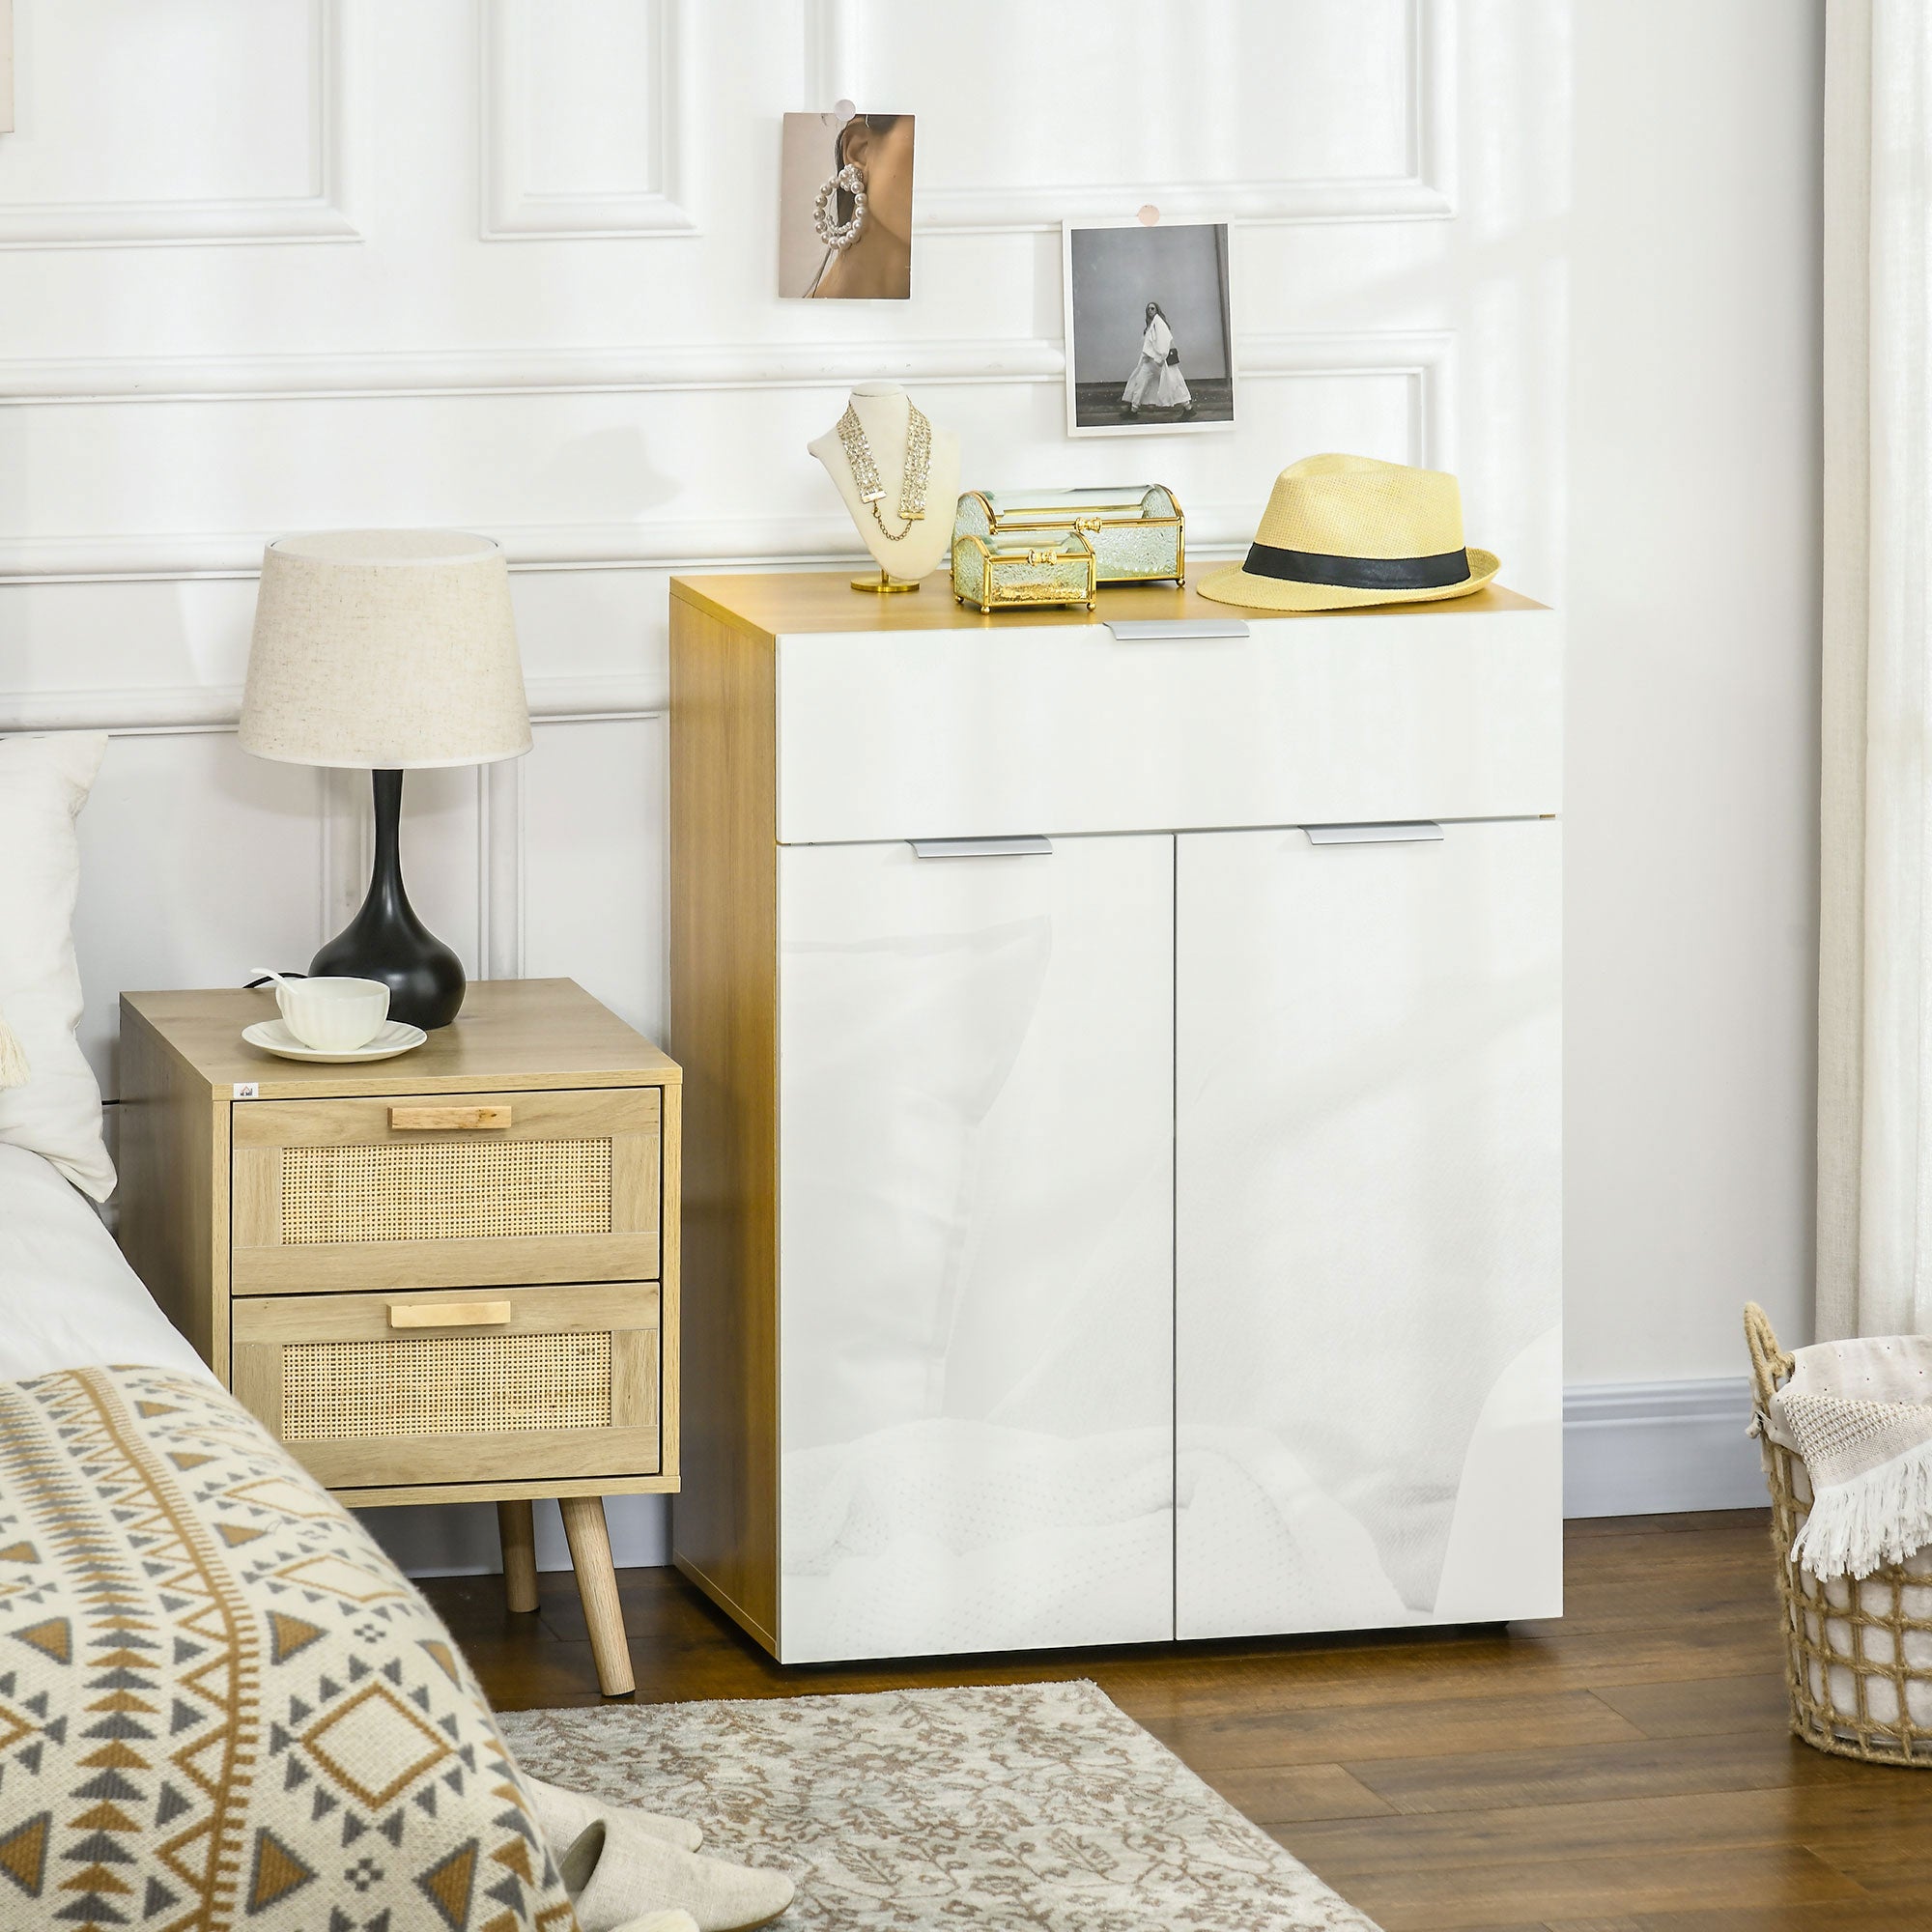 HOMCOM Modern Storage Cabinet, High Gloss Slim Sideboard with Drawer, Door Cupboard, Adjustable Shelves, White and Natural